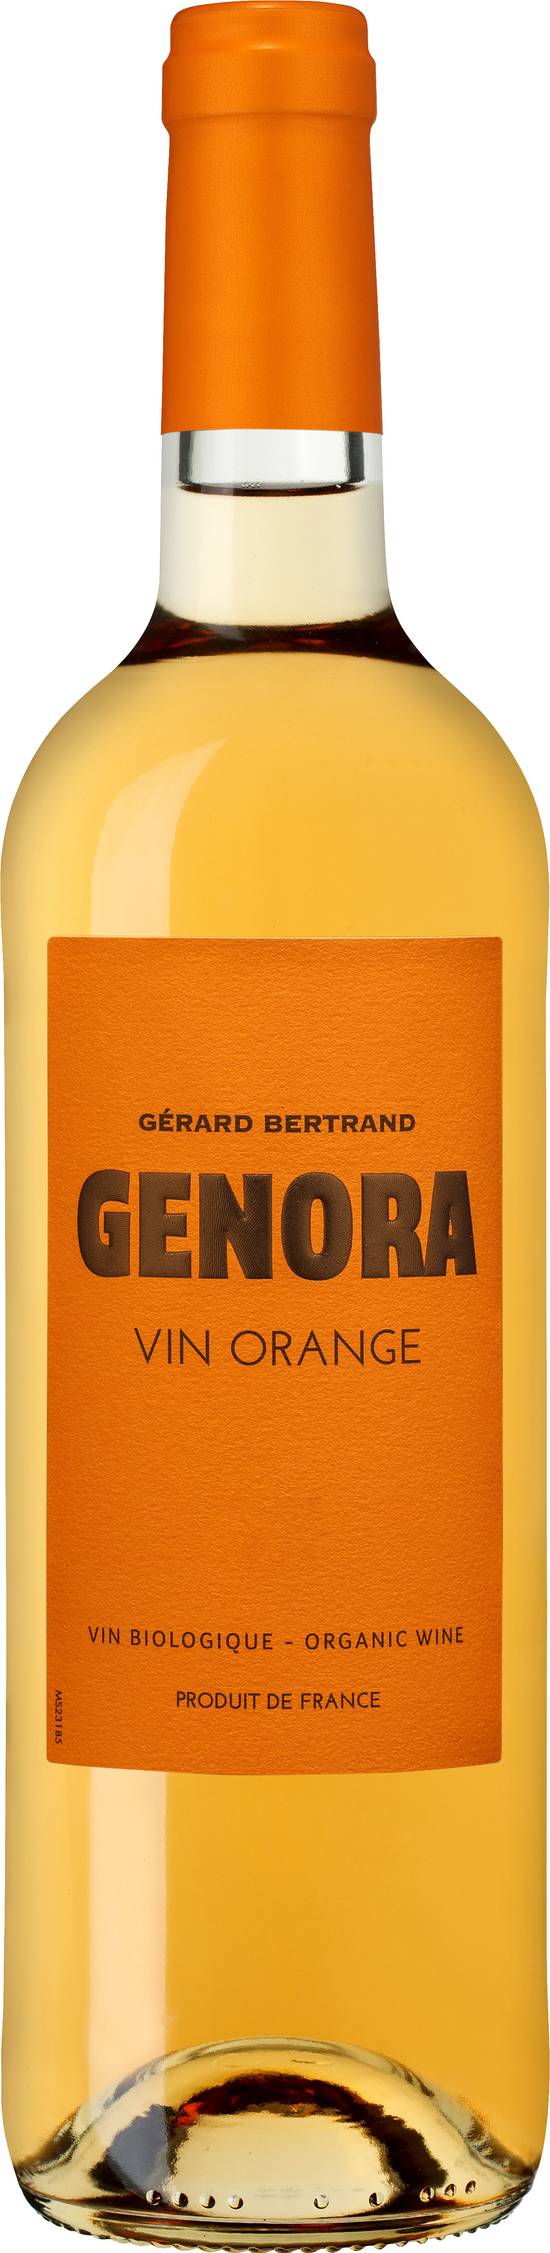 Gérard Bertrand Genora - Vin blanc orange domestique (750 ml)